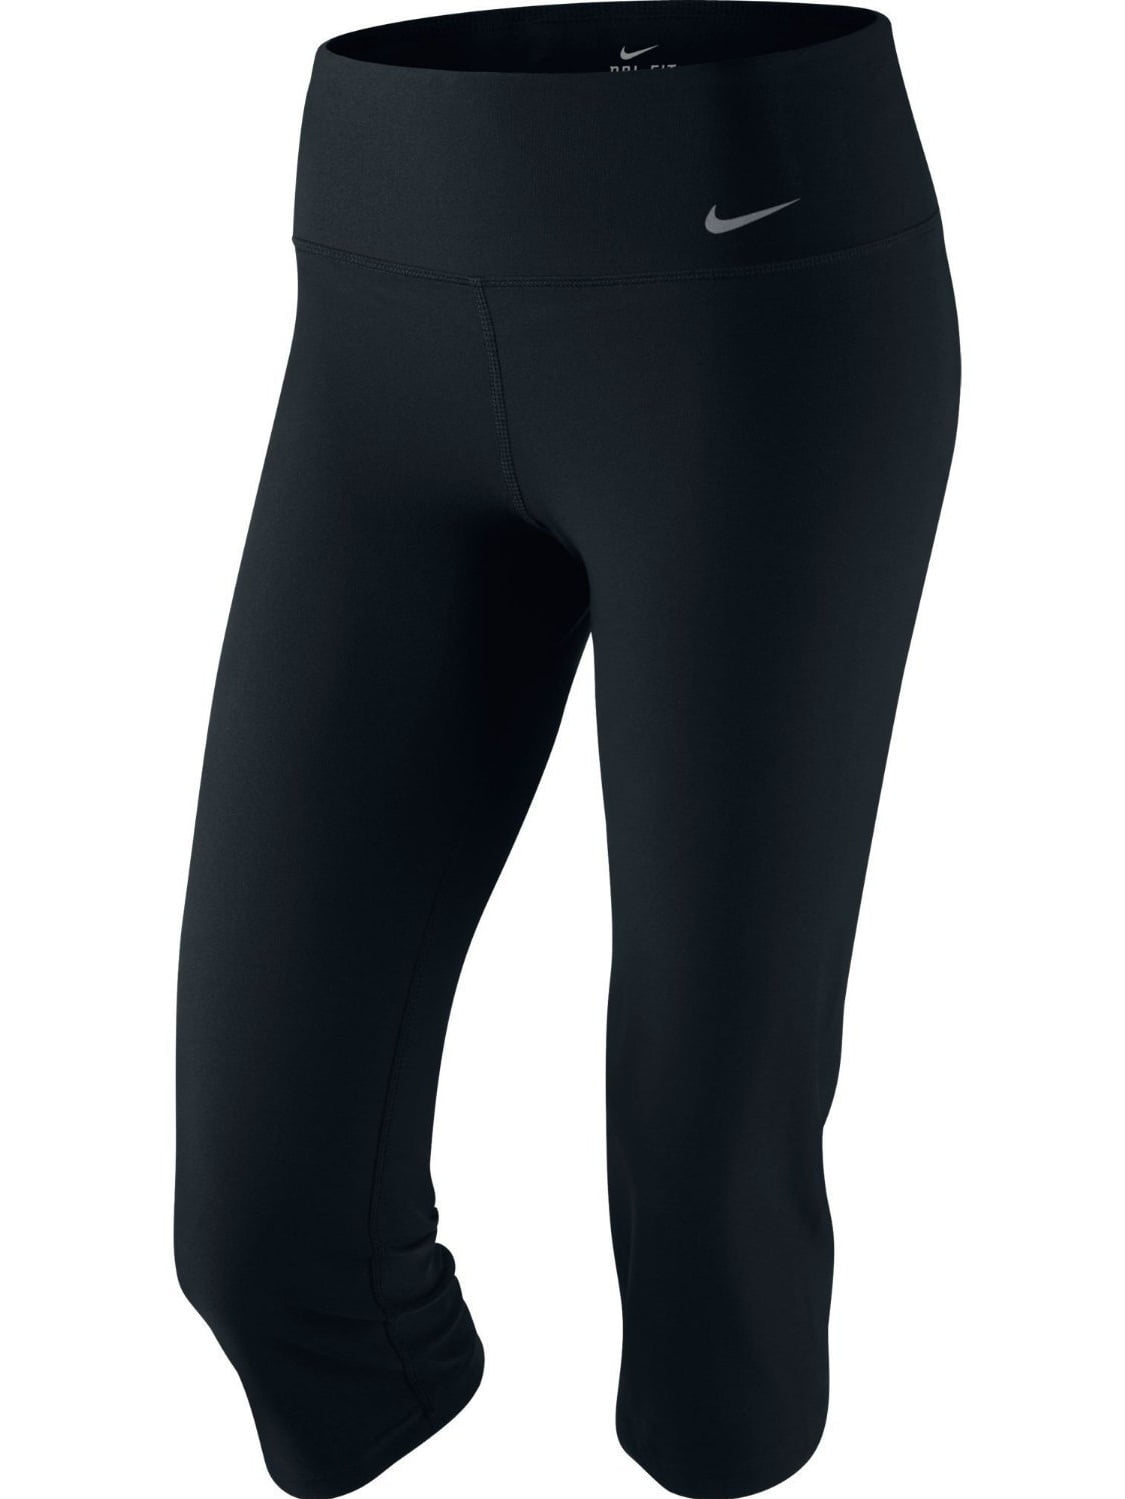 gedragen Gastvrijheid slikken Nike Women's Dri-Fit Slim Fit Training Capris-Black - Walmart.com